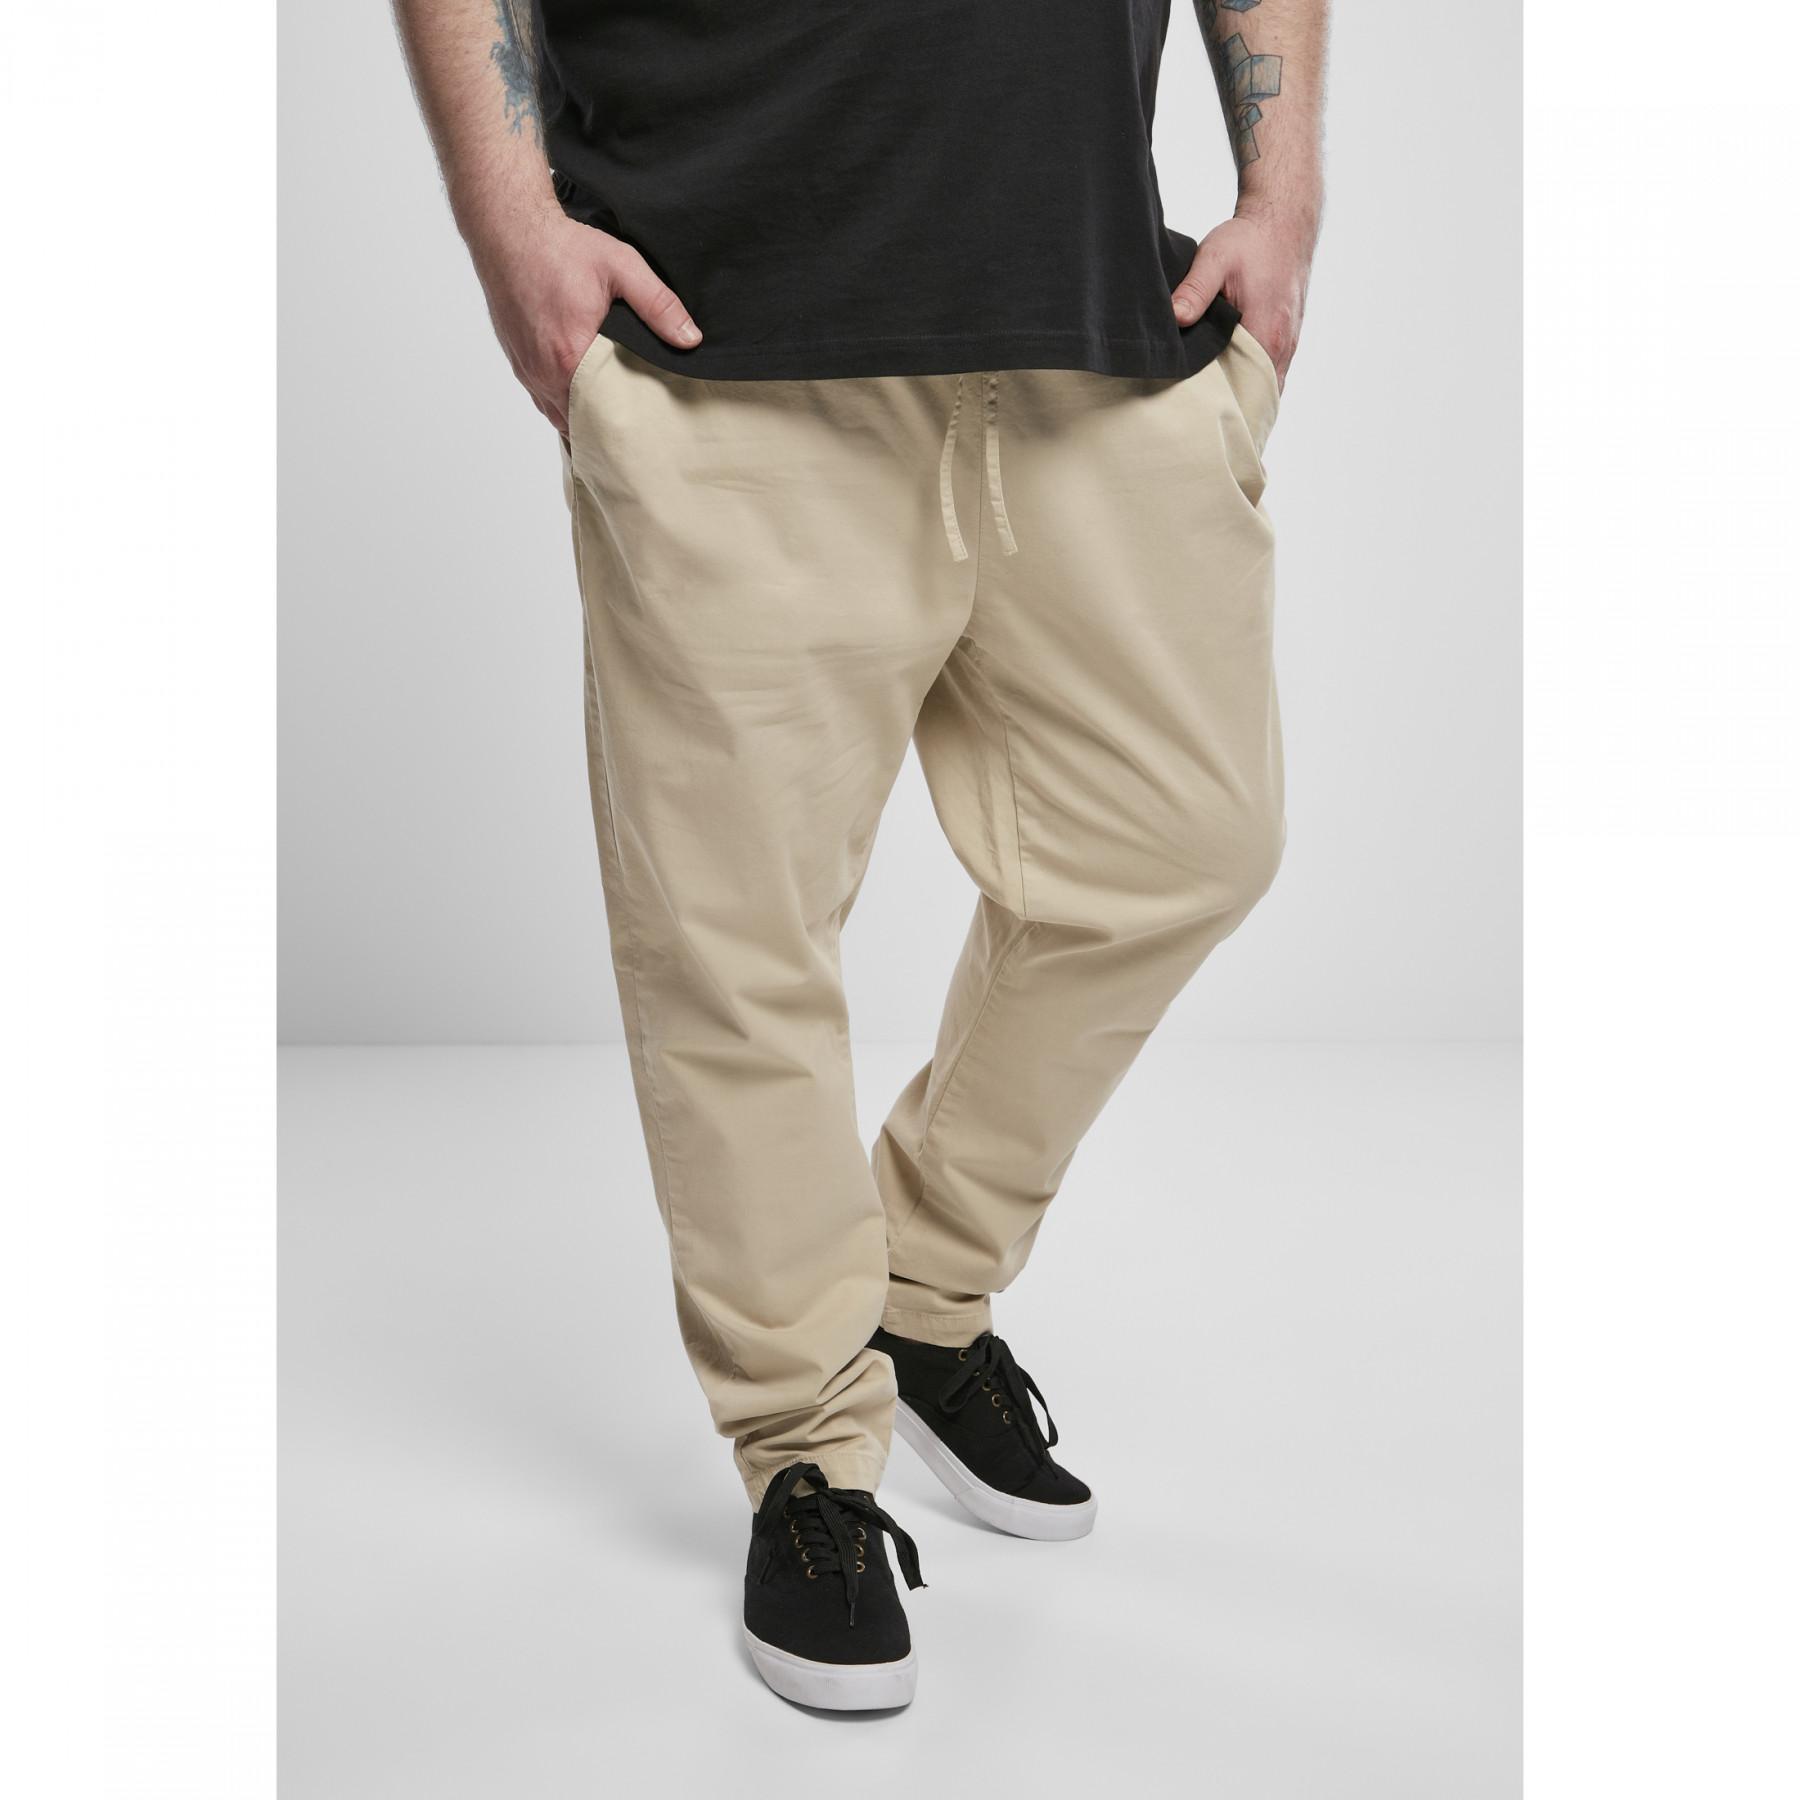 Spodnie Urban Classics tapered cotton jogger (grandes tailles)